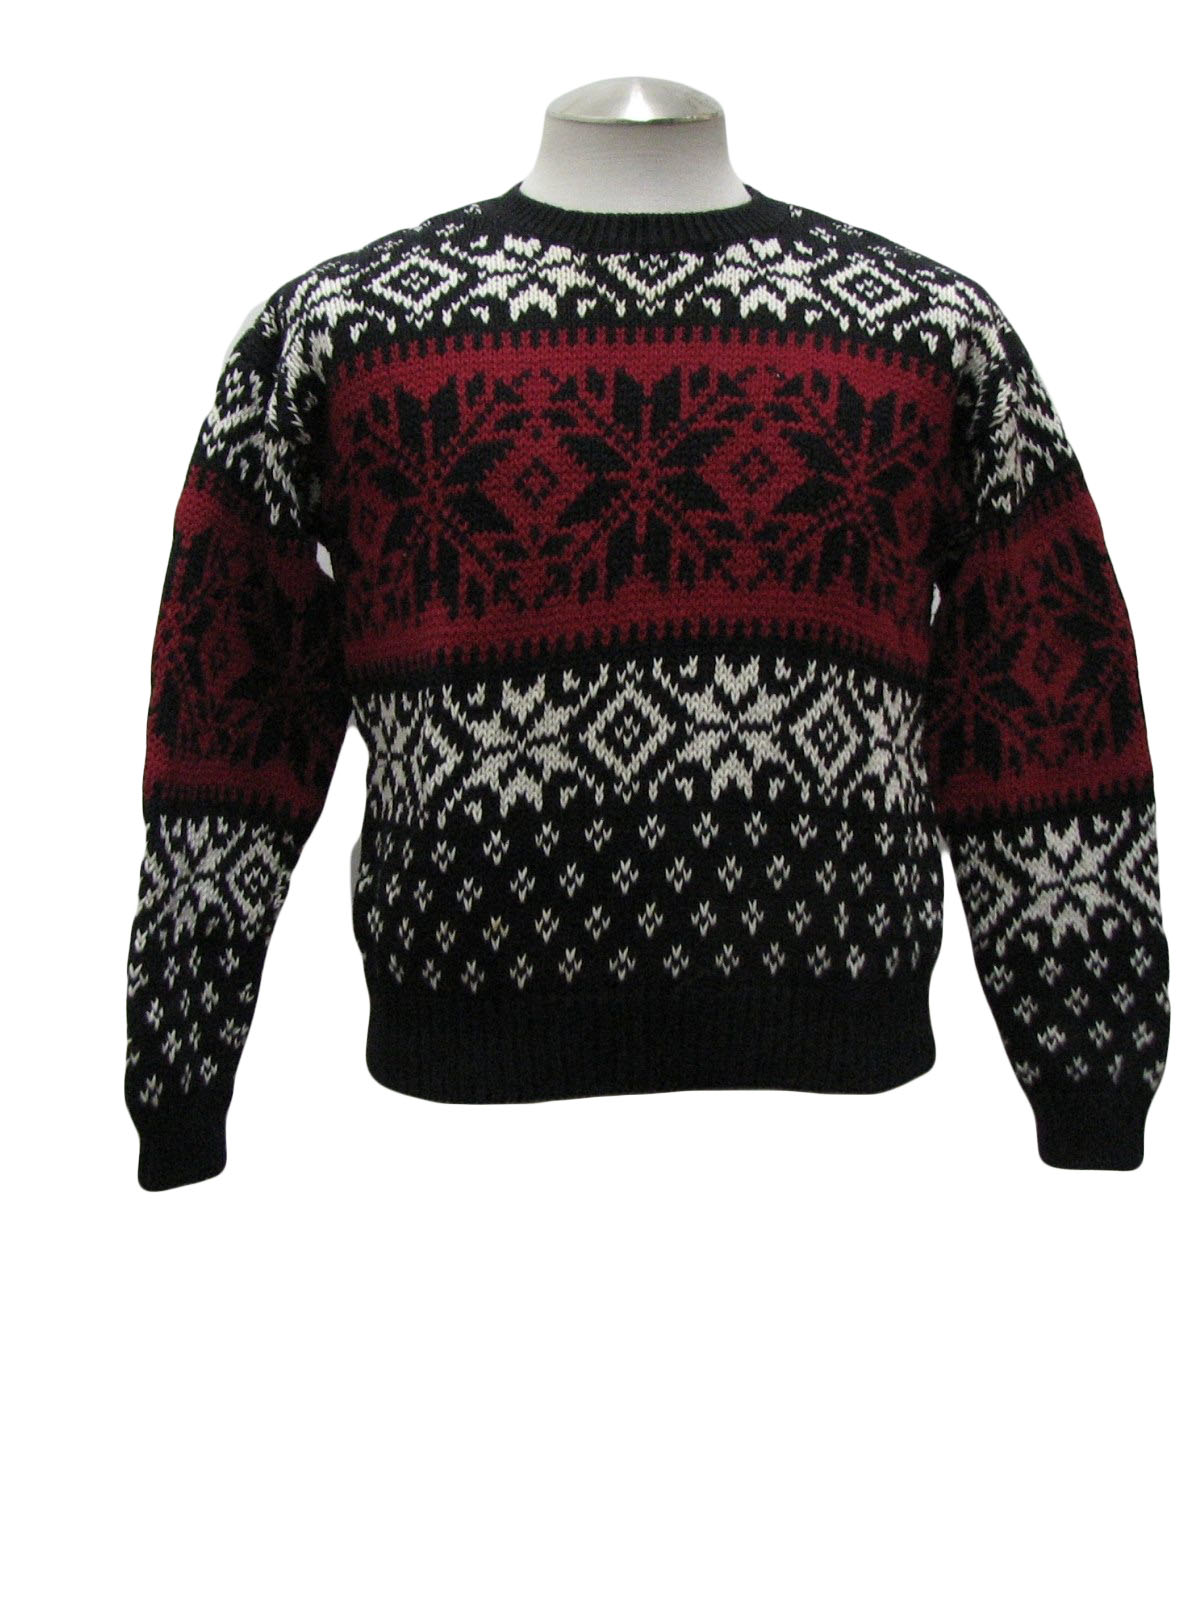 Womens Christmas Sweater: -Paris- Womens black background ramie cotton ...